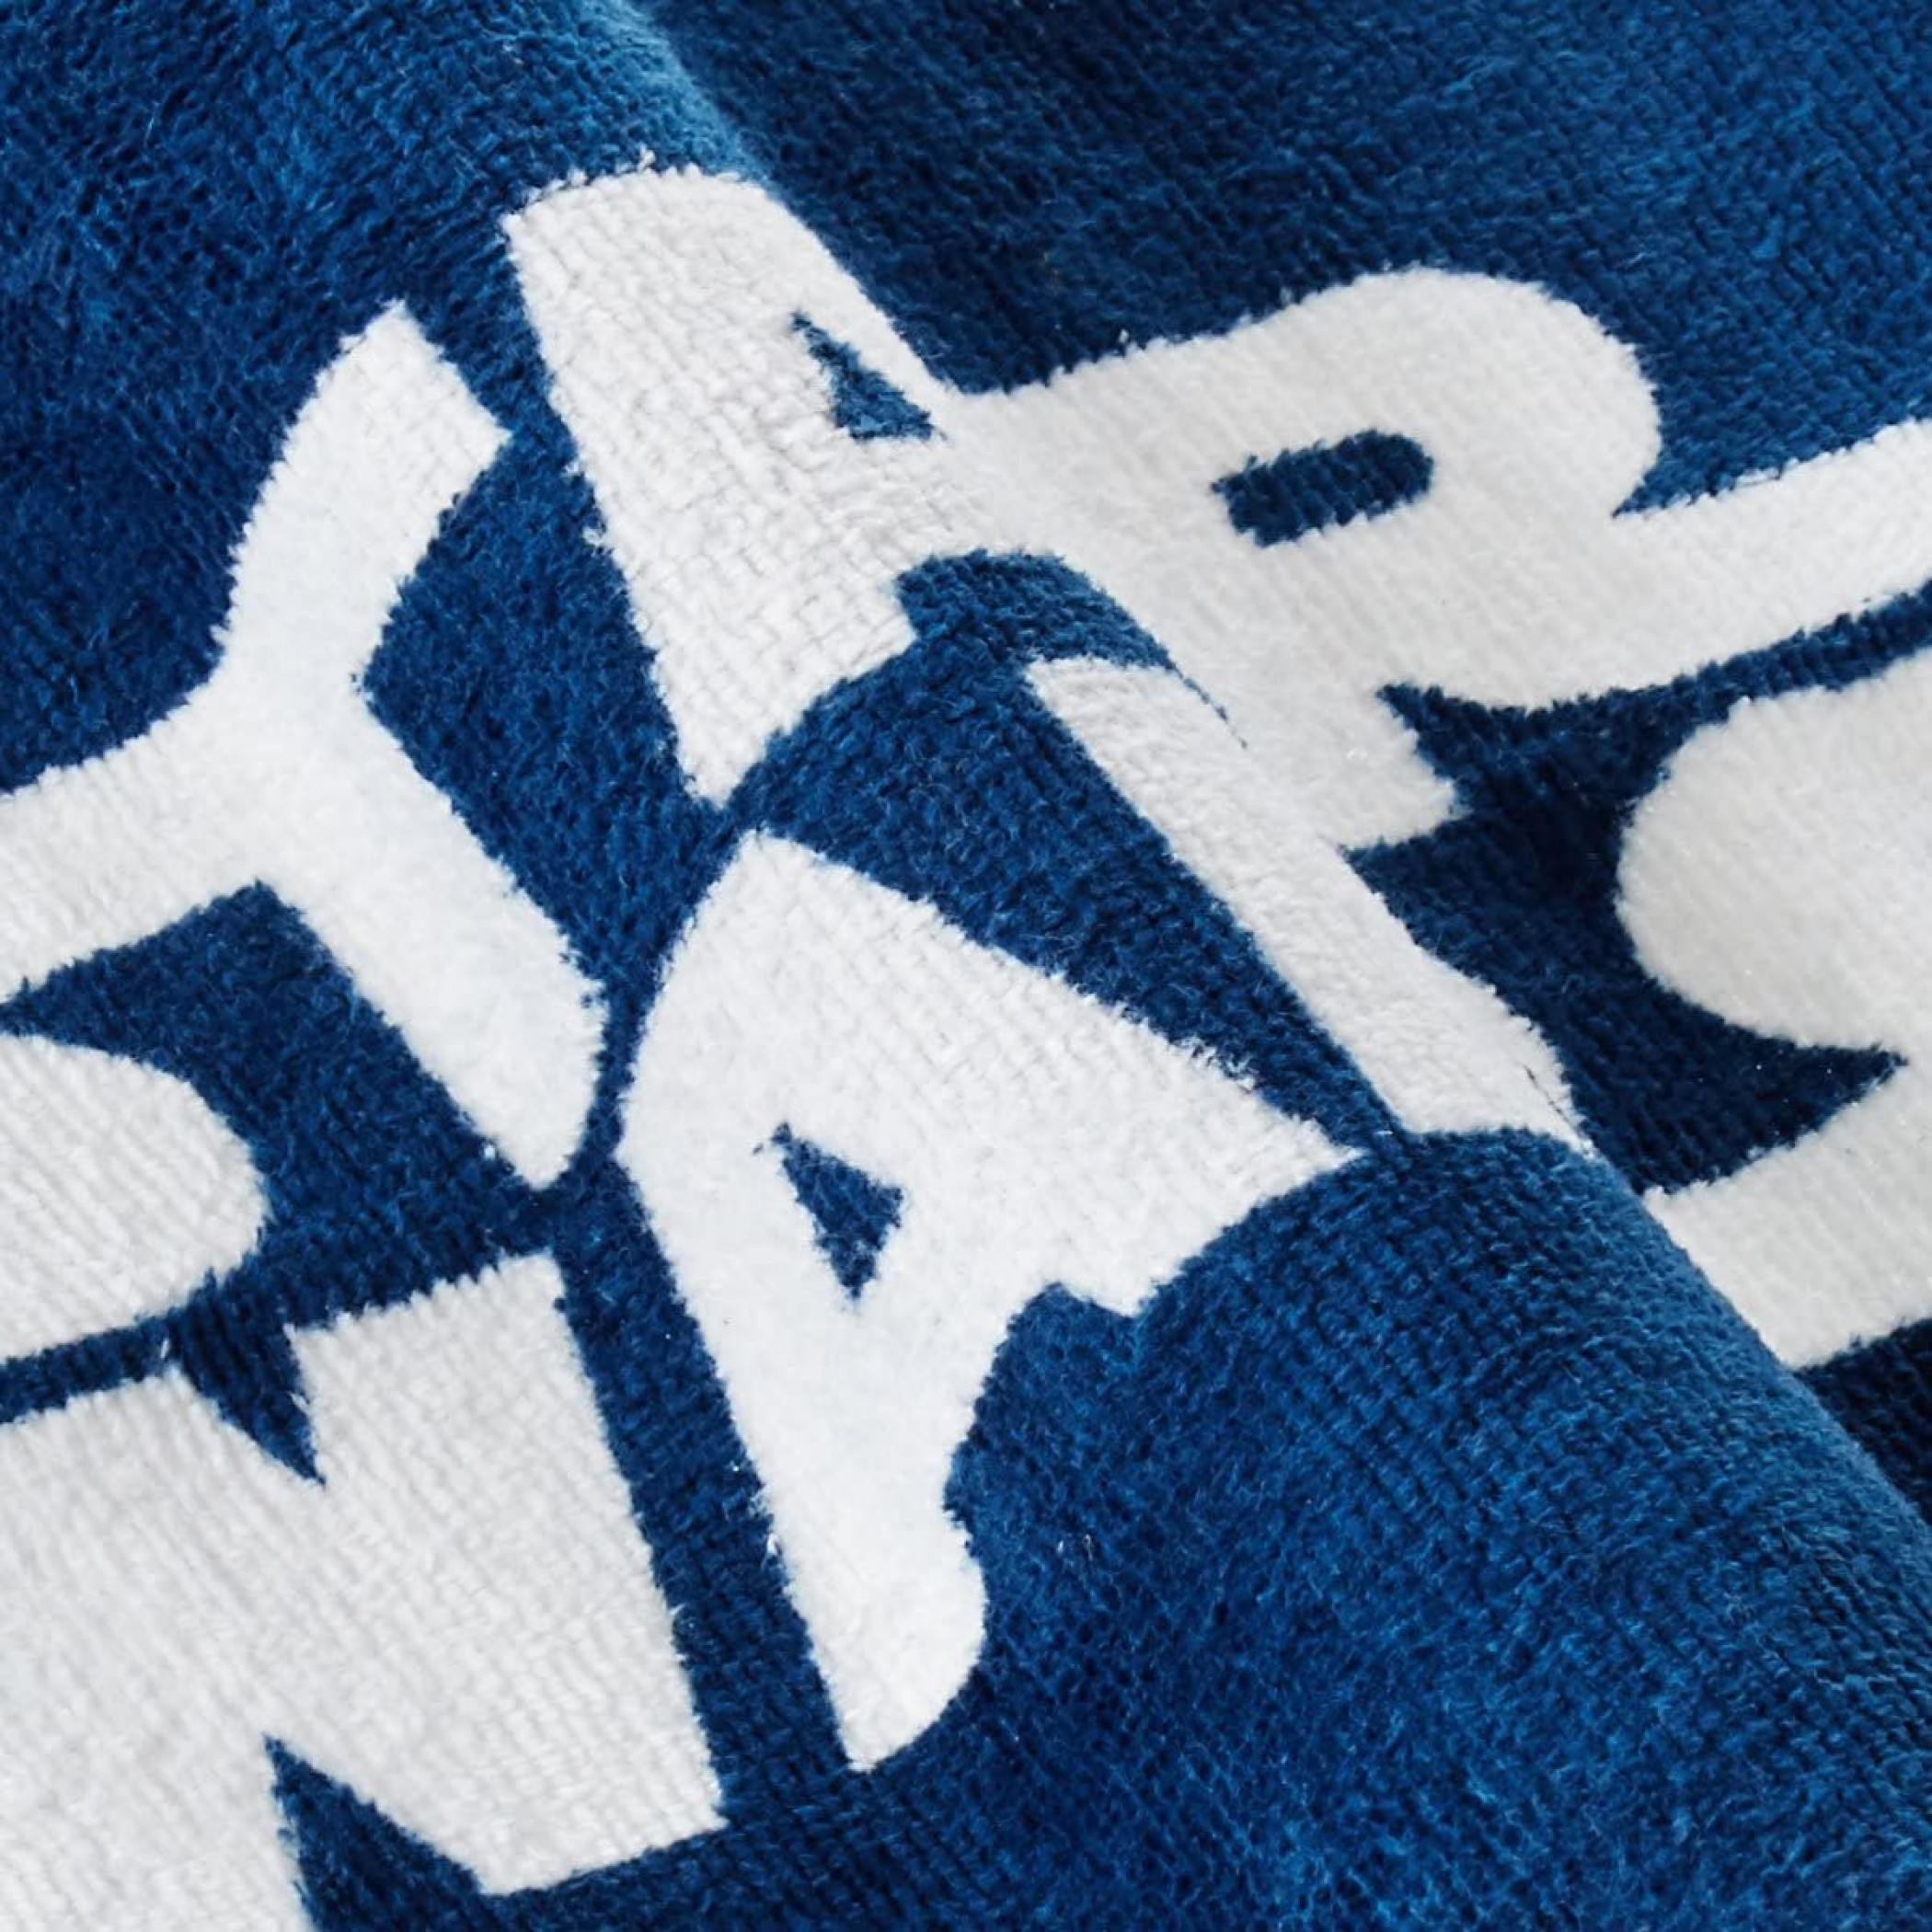 Star Wars Classic Saga 6-Piece Wash Cloth Set